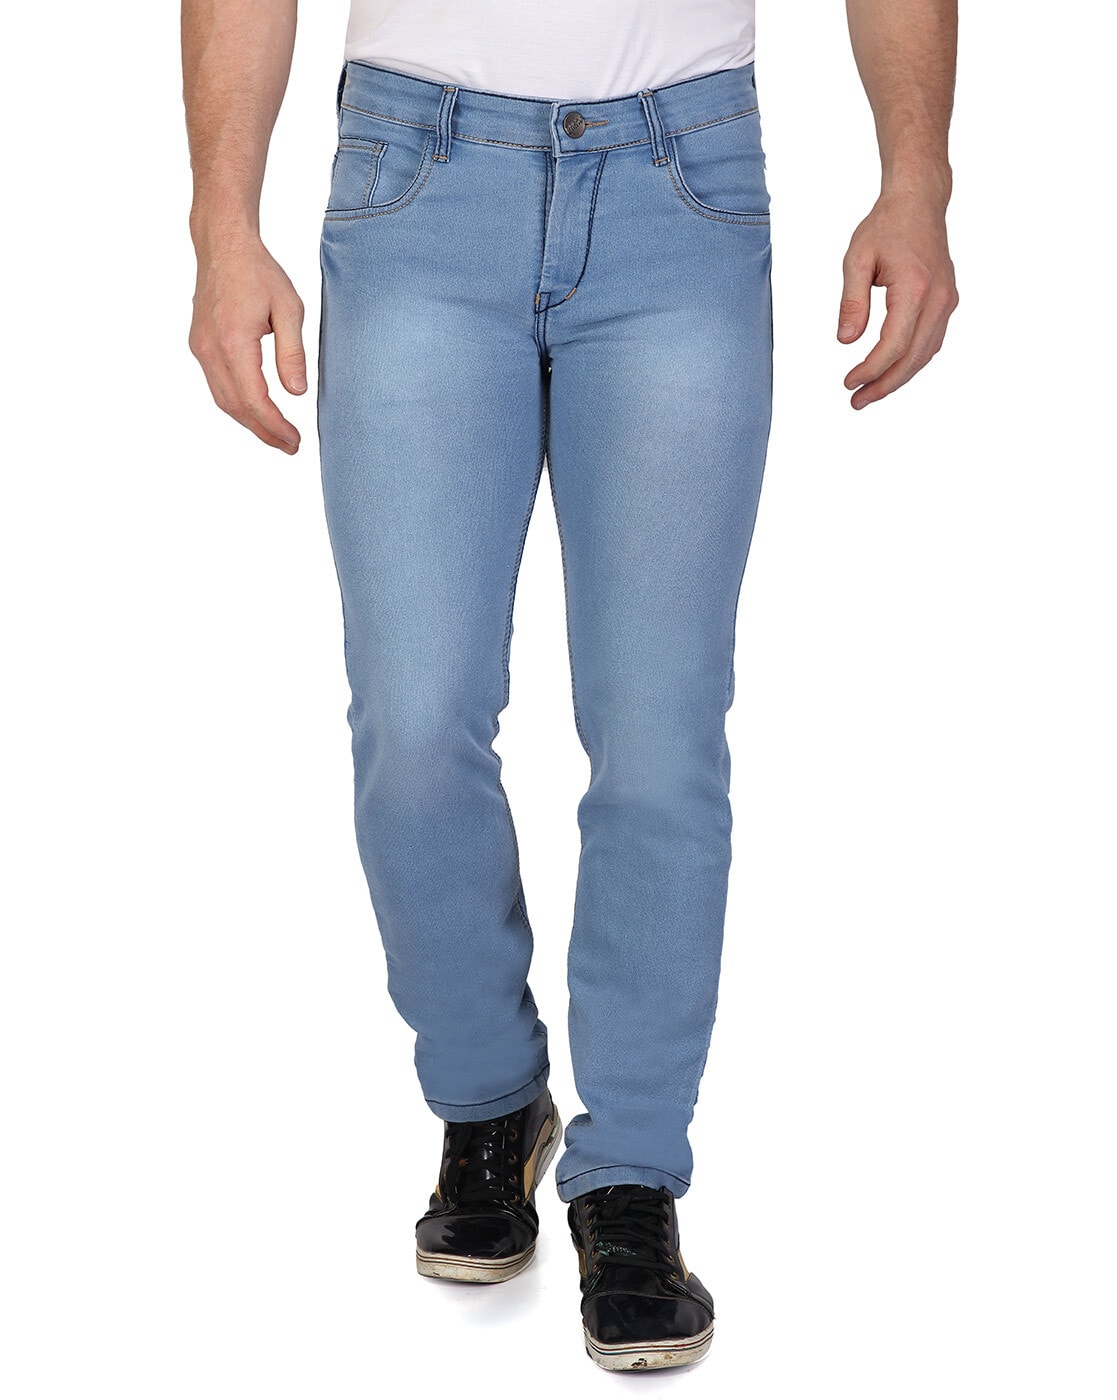 Buy China Wholesale Custom Men's Fashion Pants Light Blue Damaged Jeans Men Denim  Jean Slim Fit & Men's Light Blue Damaged Jeans Men Denim Jean $10.9 |  Globalsources.com